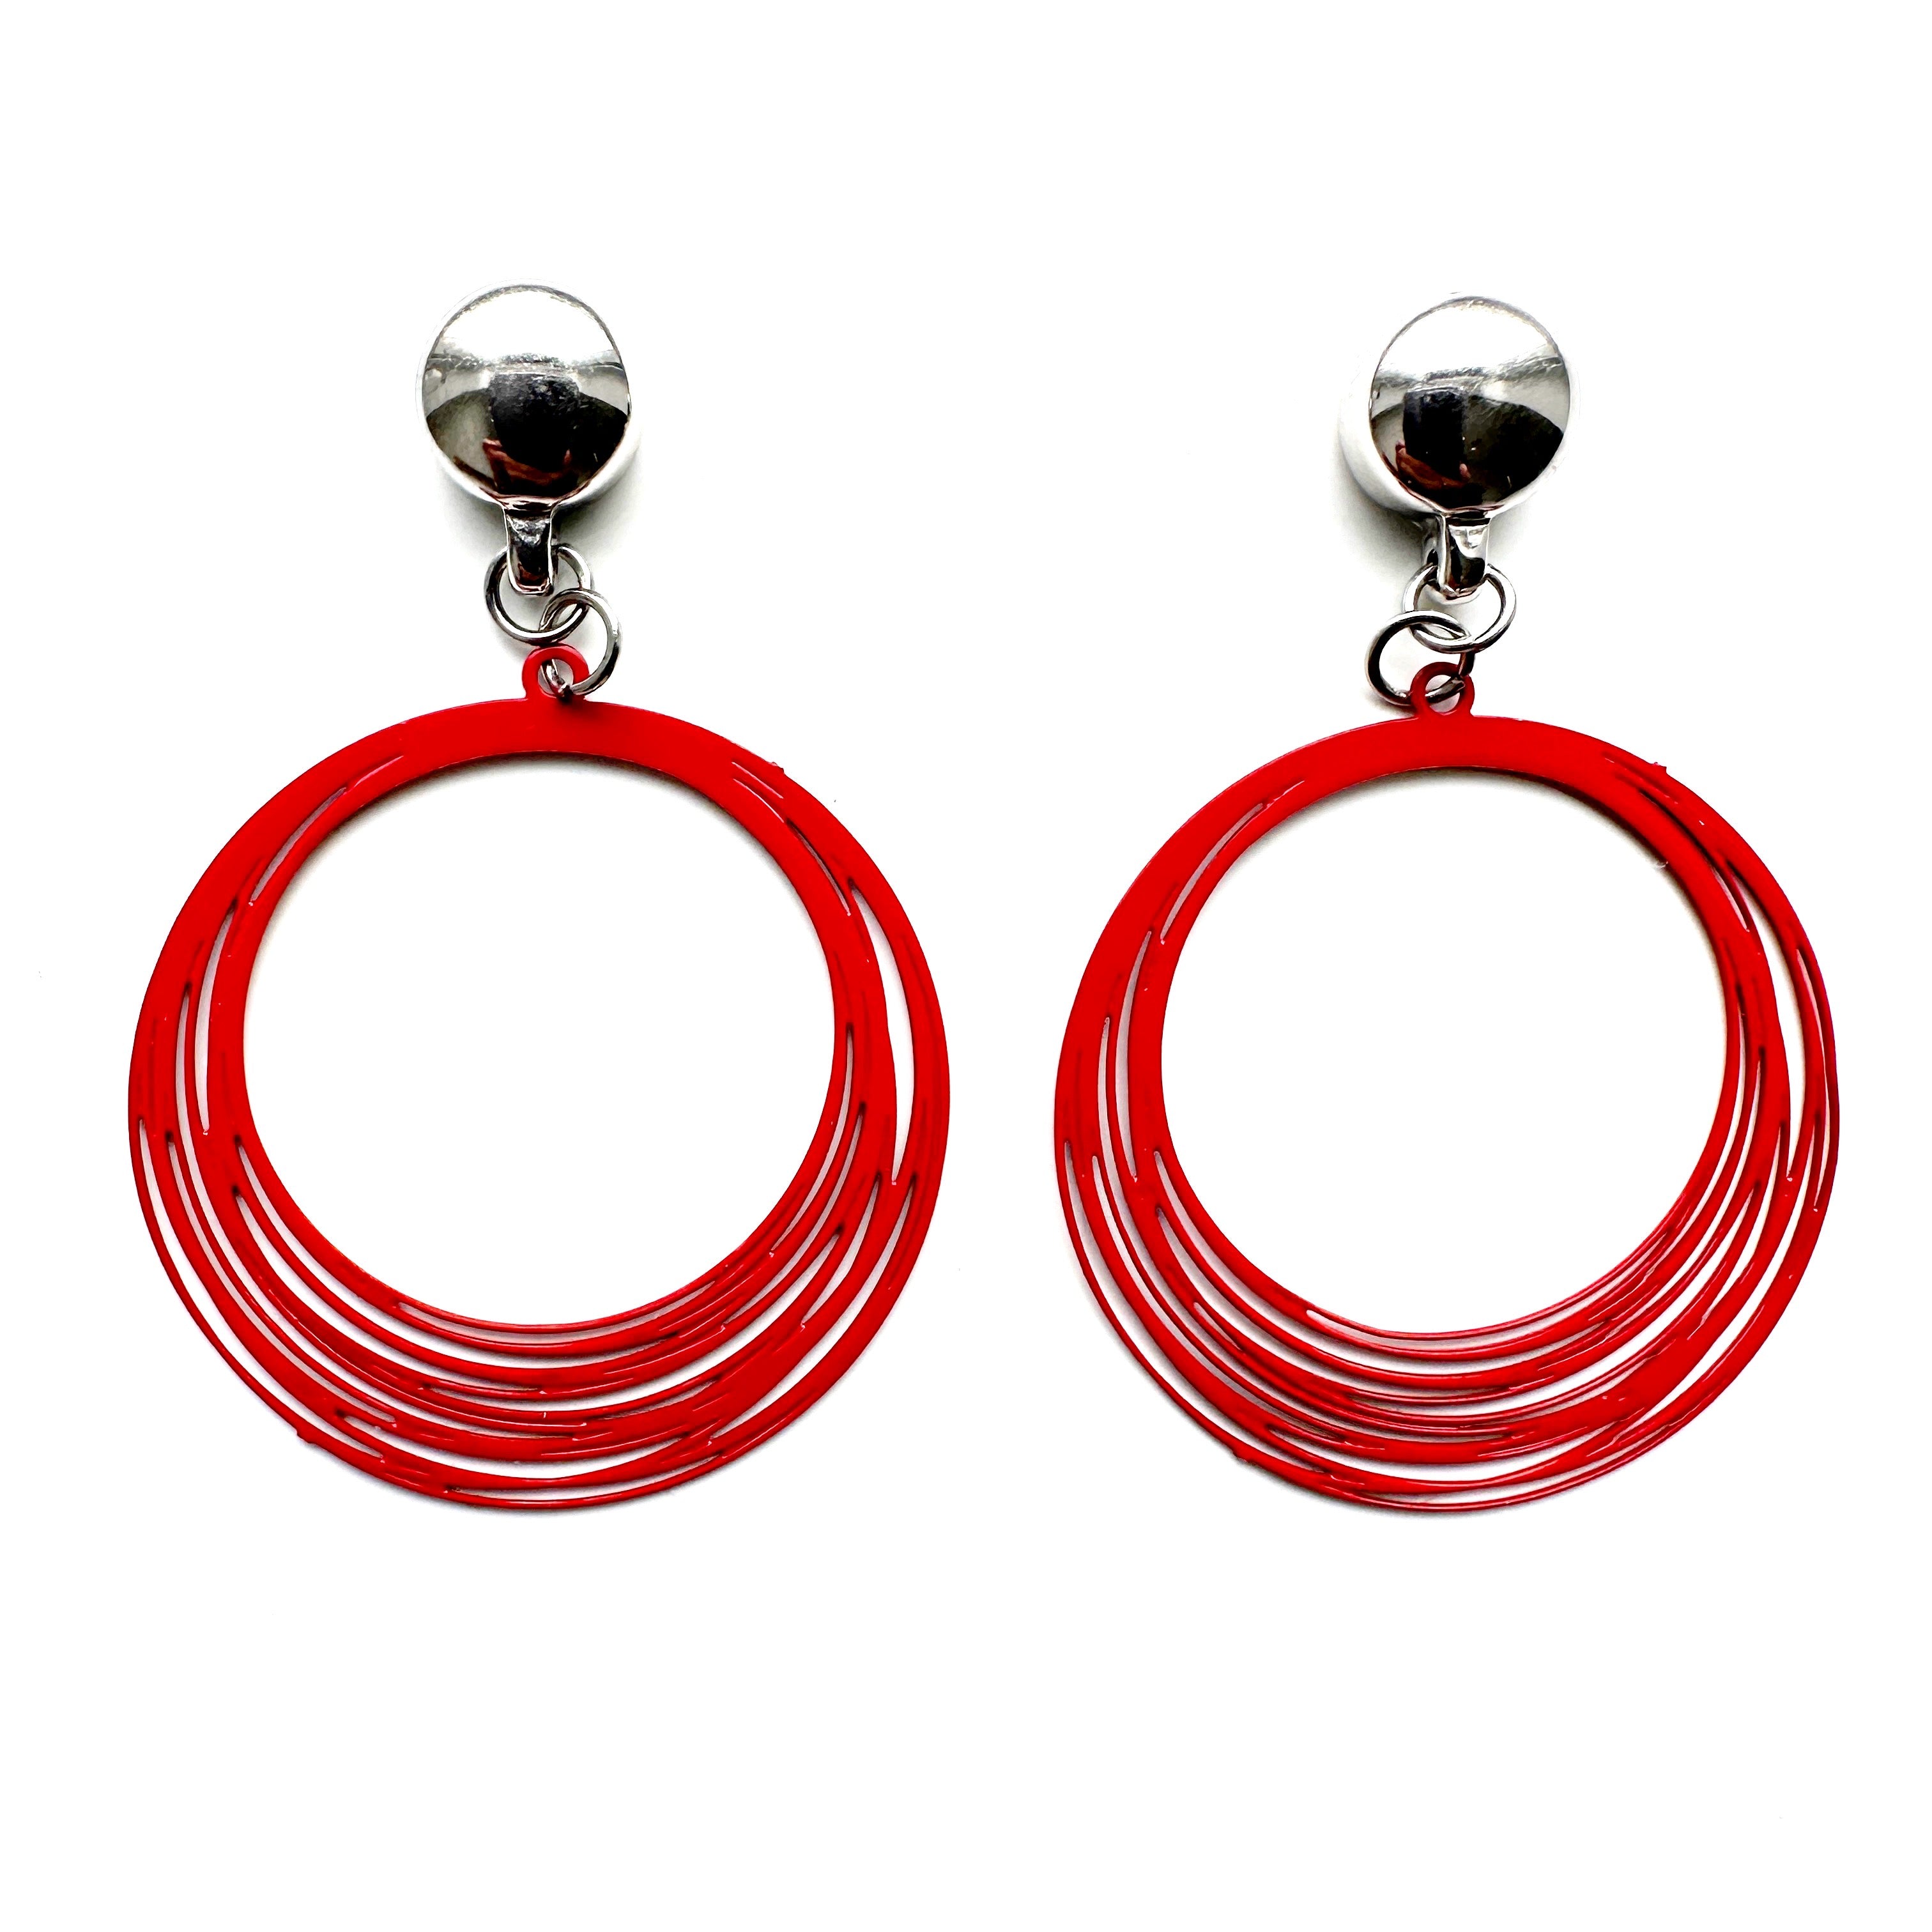 TI-GO Black / Red String Rings earring